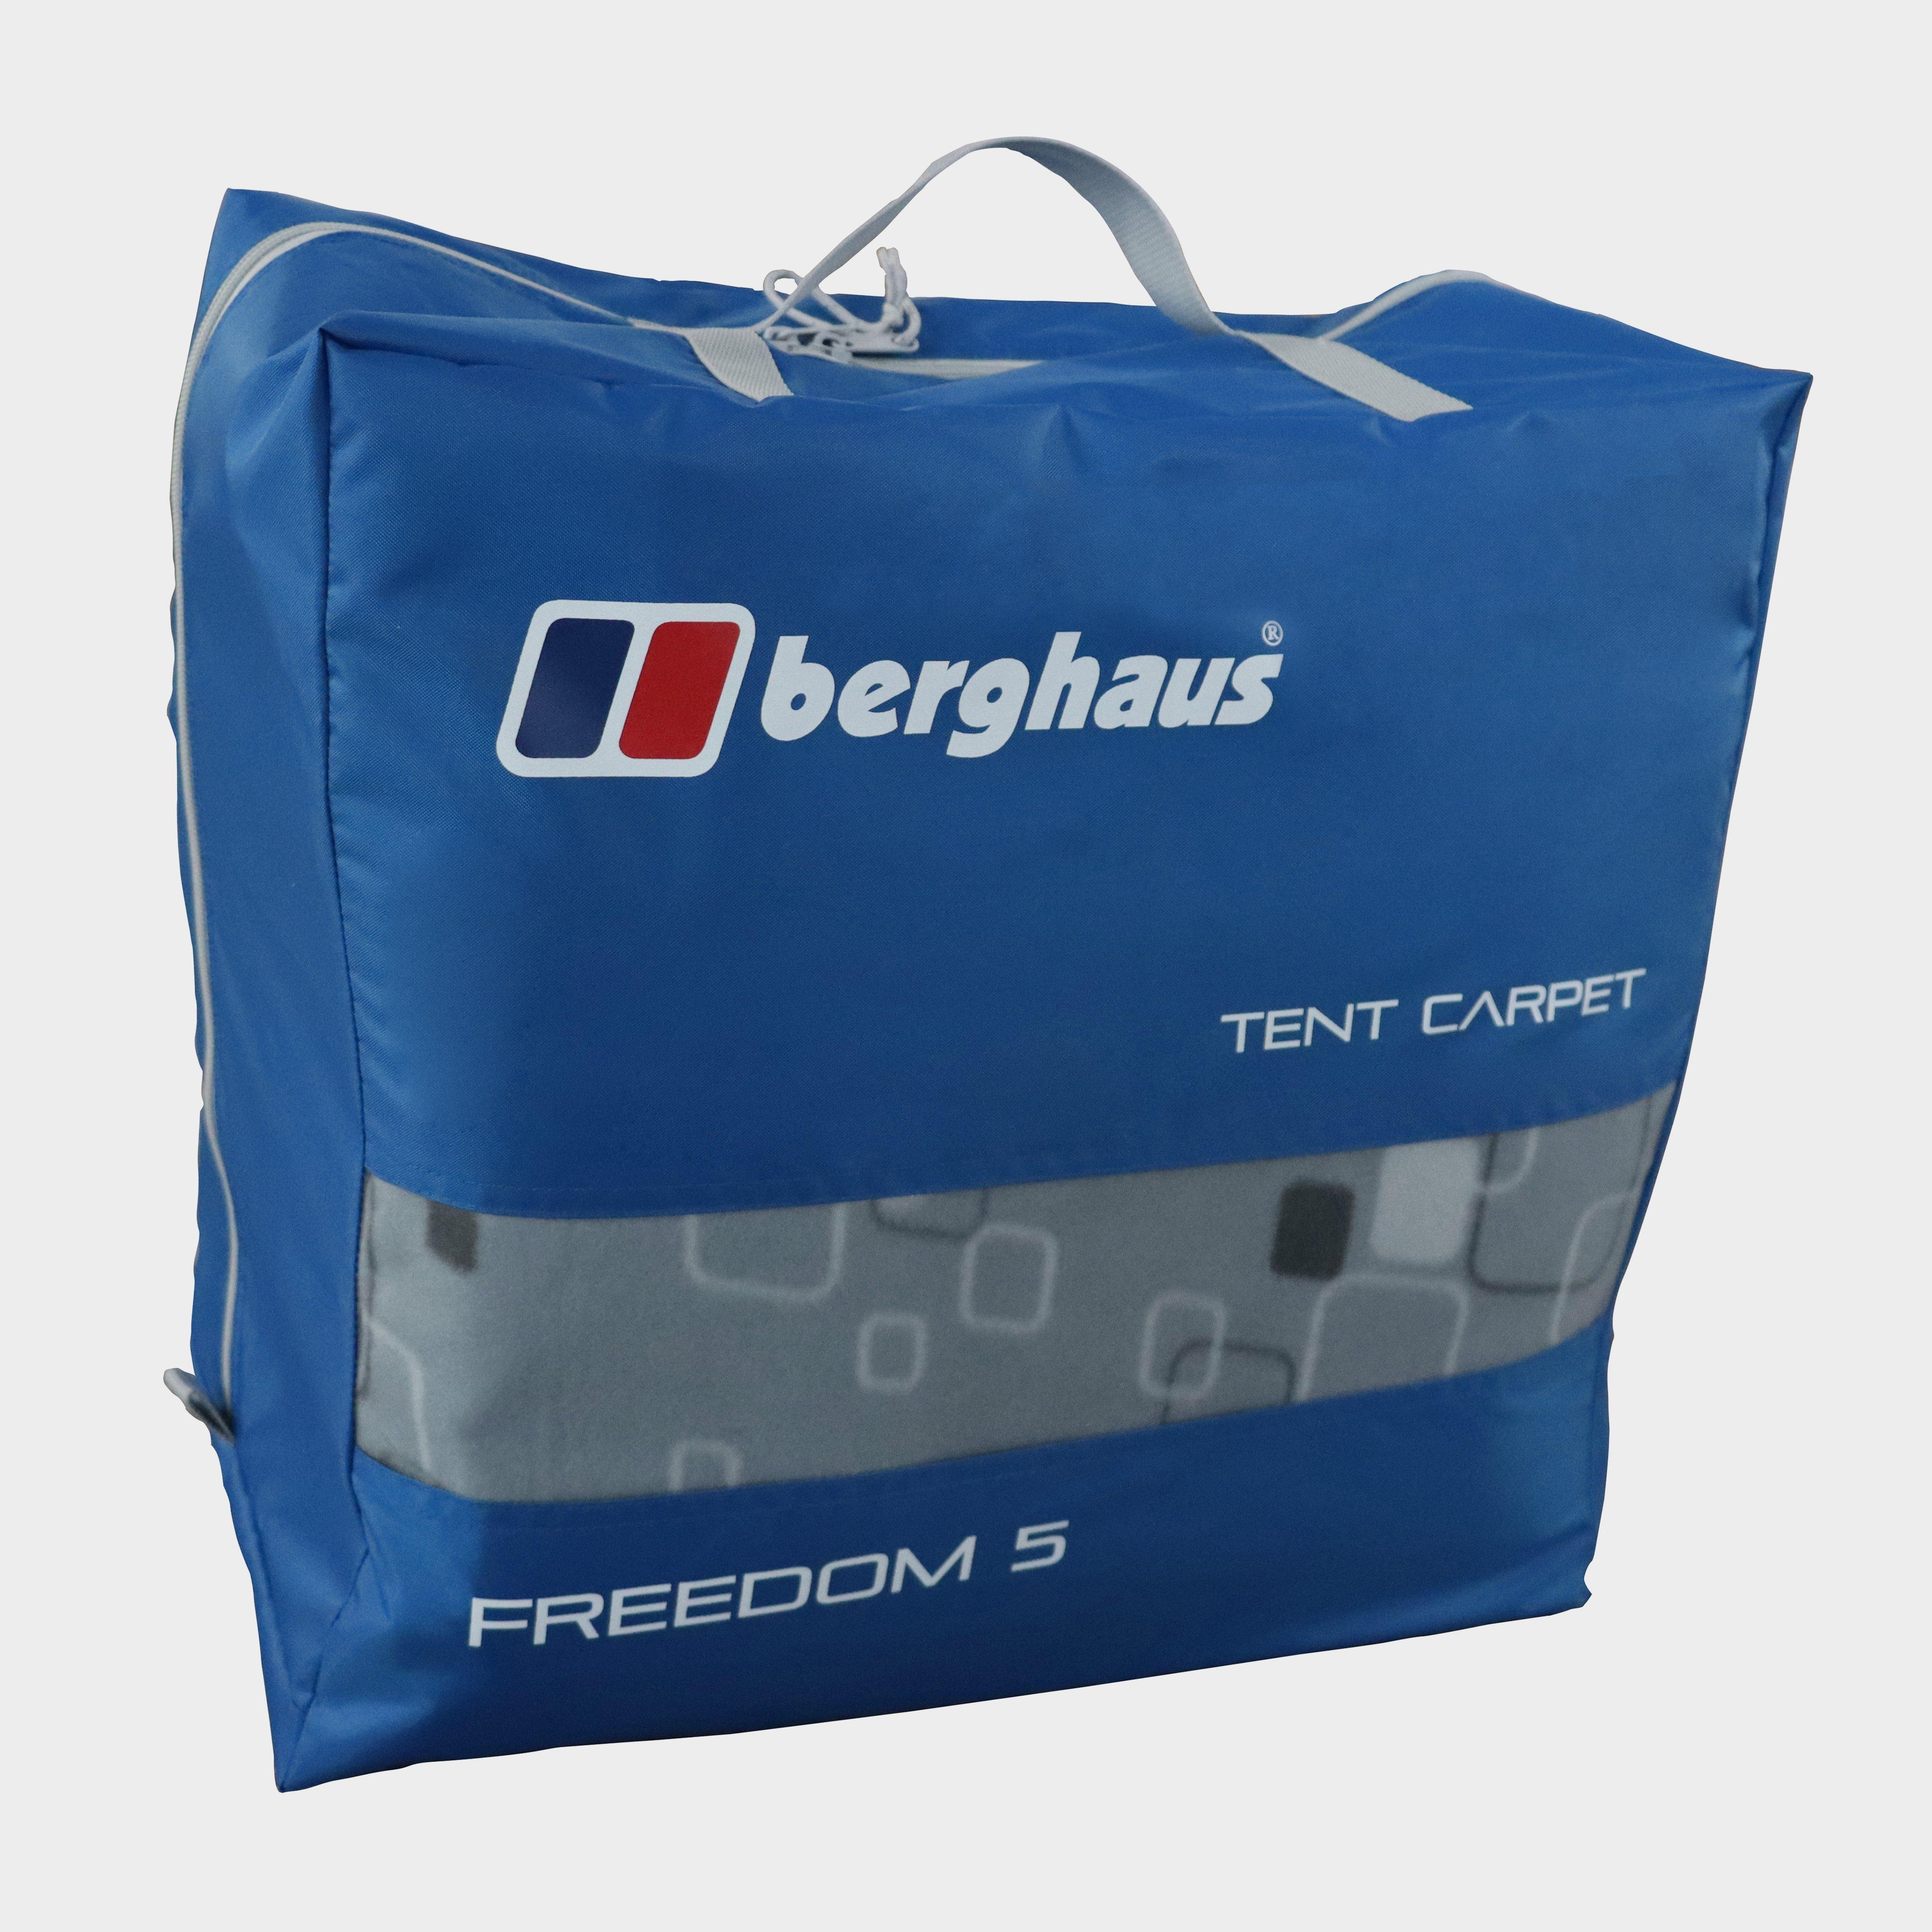  Berghaus Freedom 5 Tent Carpet, Grey